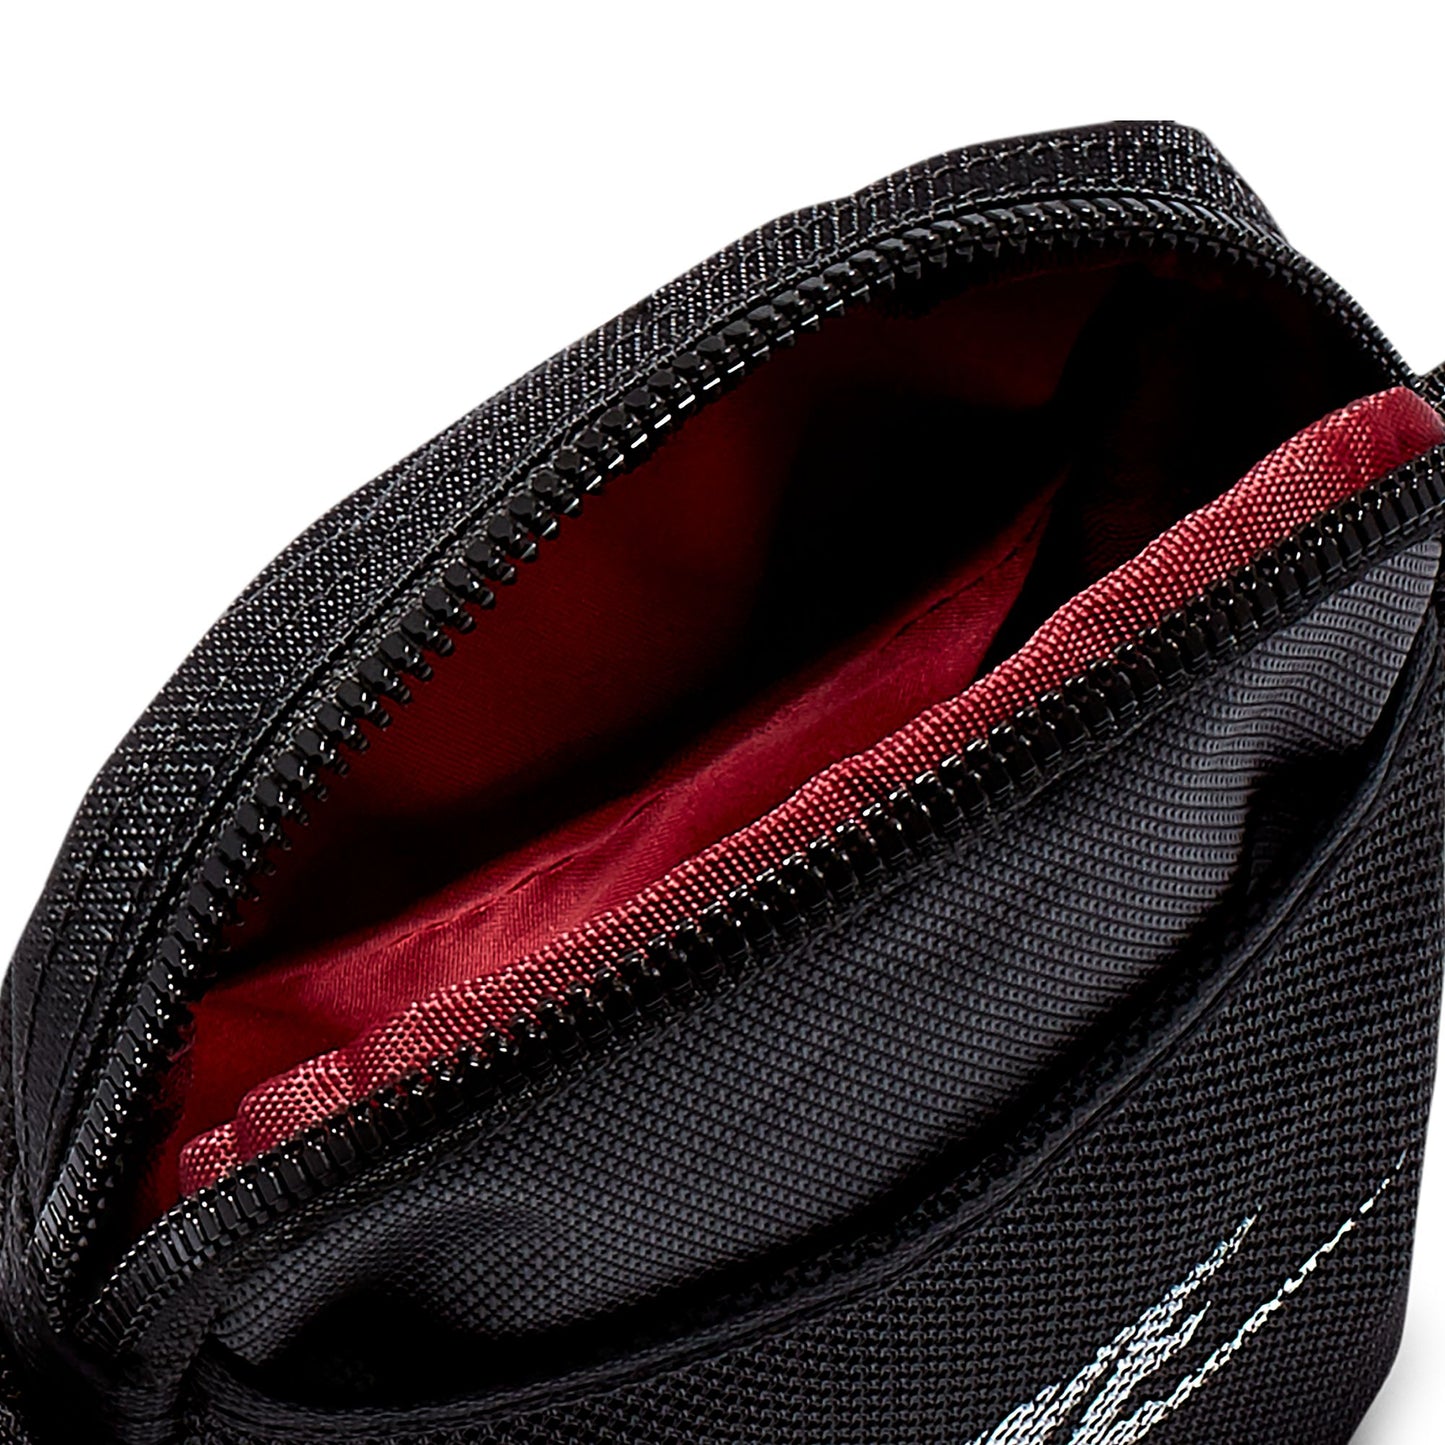 Nike SB - Heritage S Crossbody Bag - Velocity 21